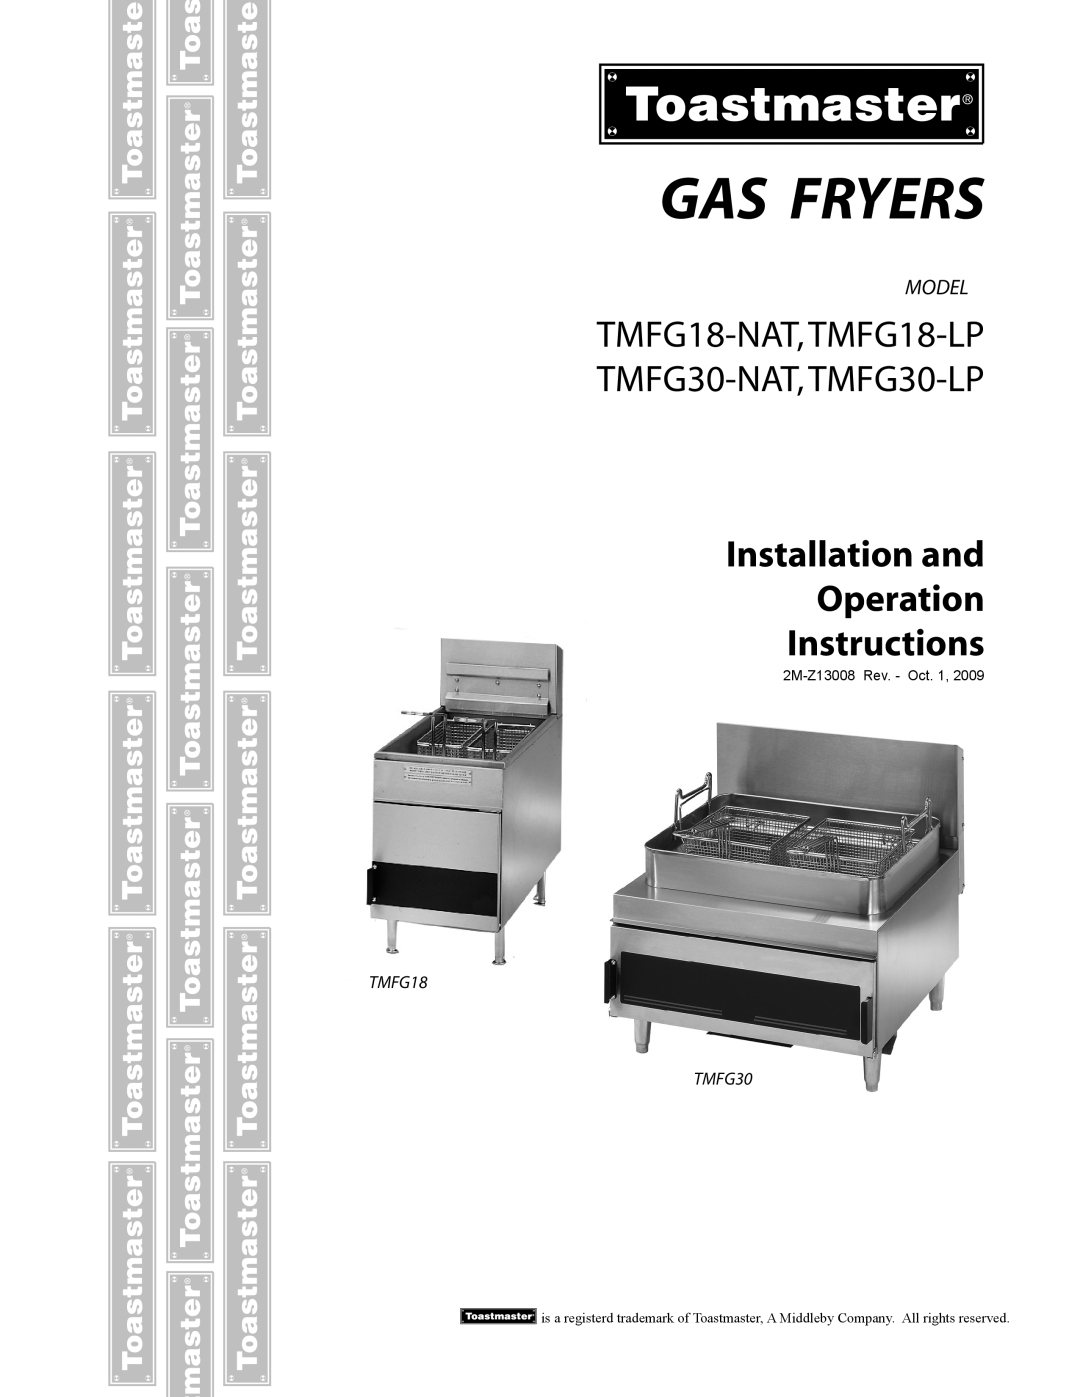 Toastmaster TMFG18-LP, TMFG30-NAT manual Gas Fryers, Installation and Operation Instructions, Model, TMFG18 TMFG30 